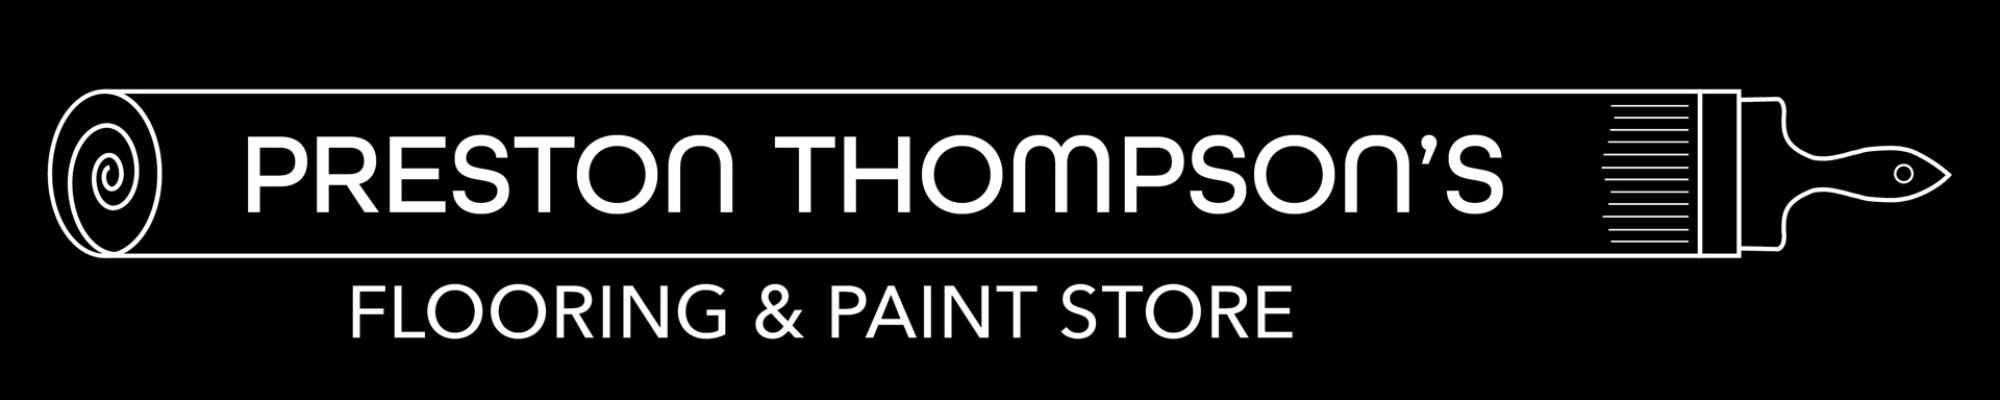 Logo for Preston Thompson's Carpet Shoppe in Dickson